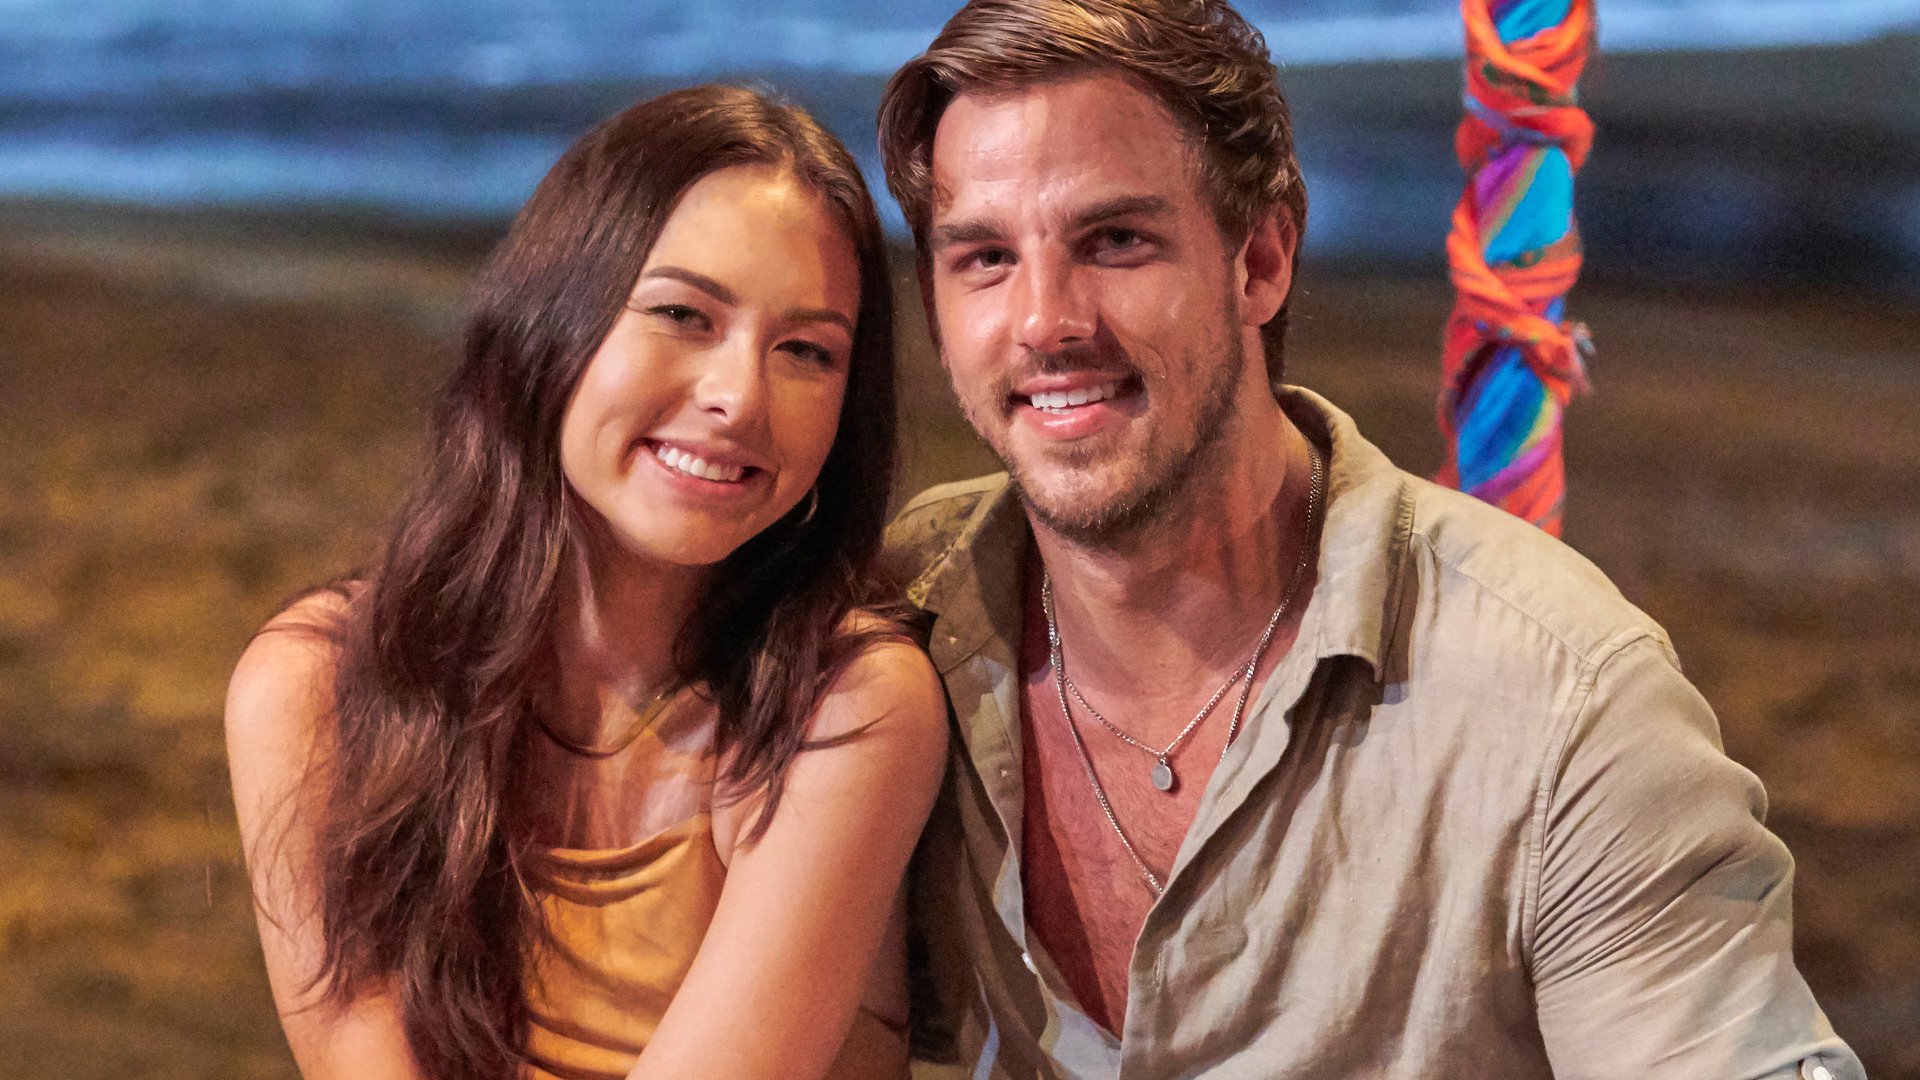 Abigail Heringer and Noah Erb sit together in ‘Bachelor in Paradise’ Season 7 Episode 5